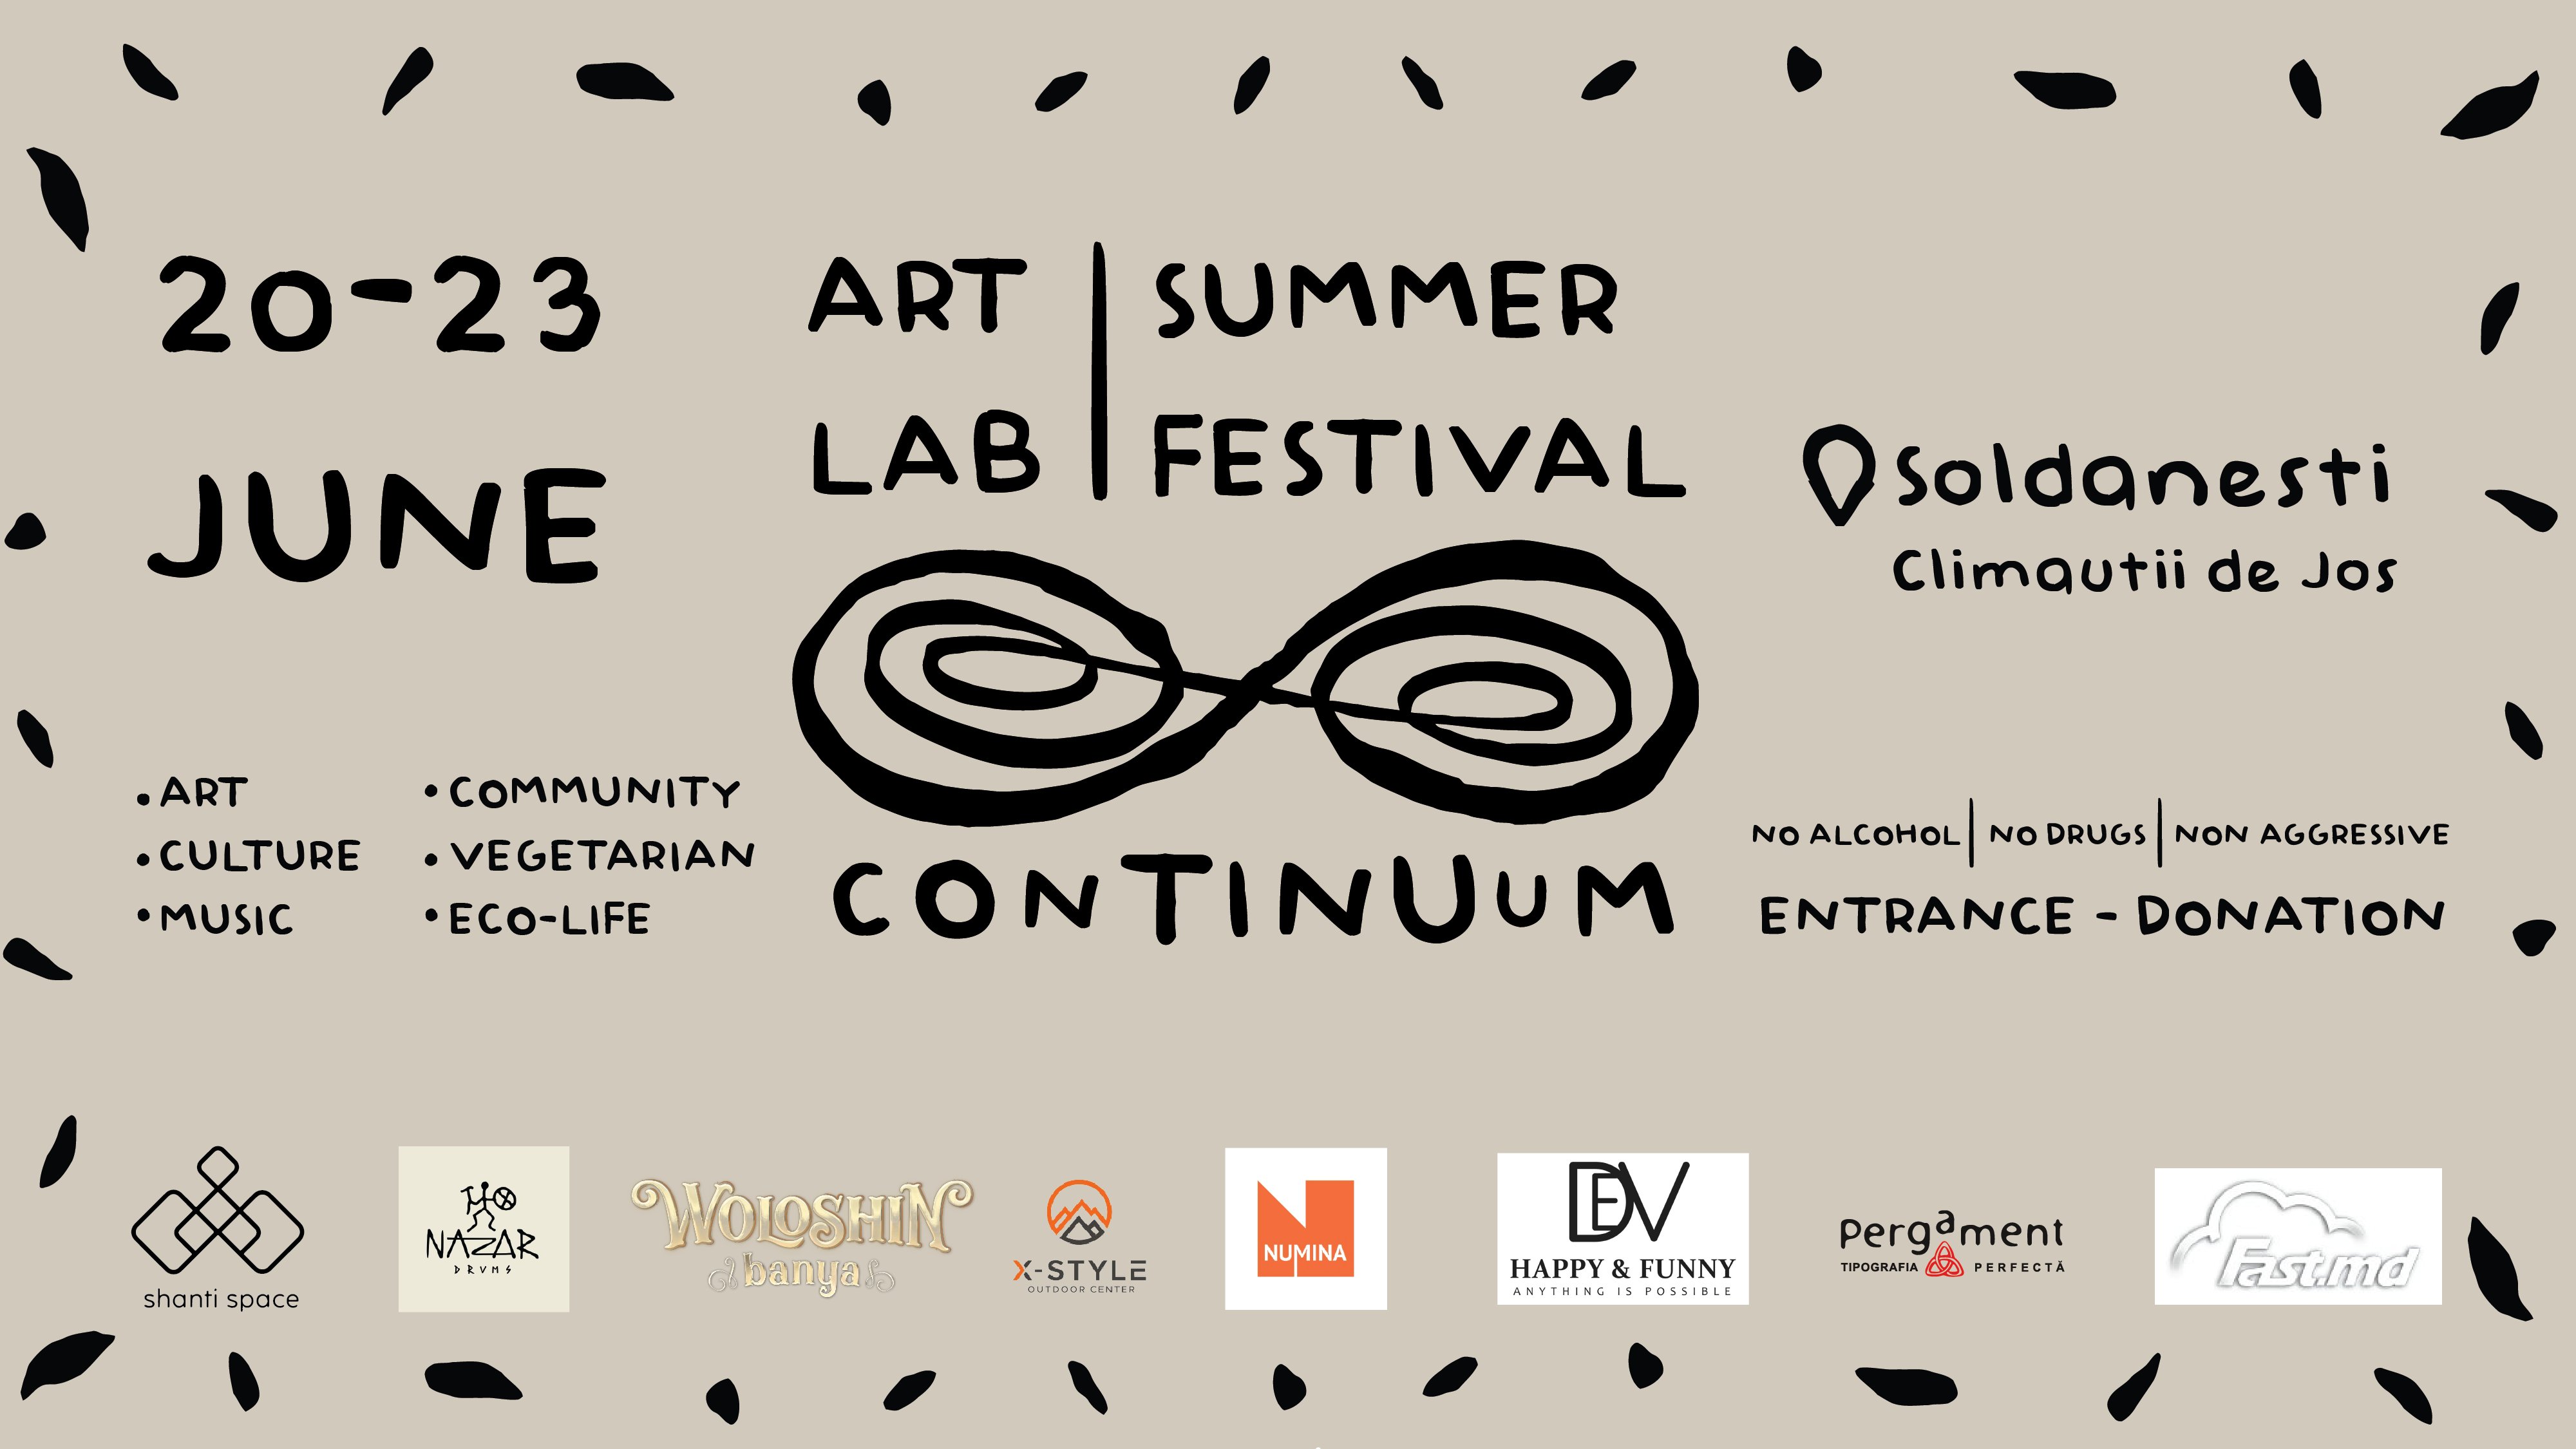 13 Art Labyrinth Summer Festival - Continuum